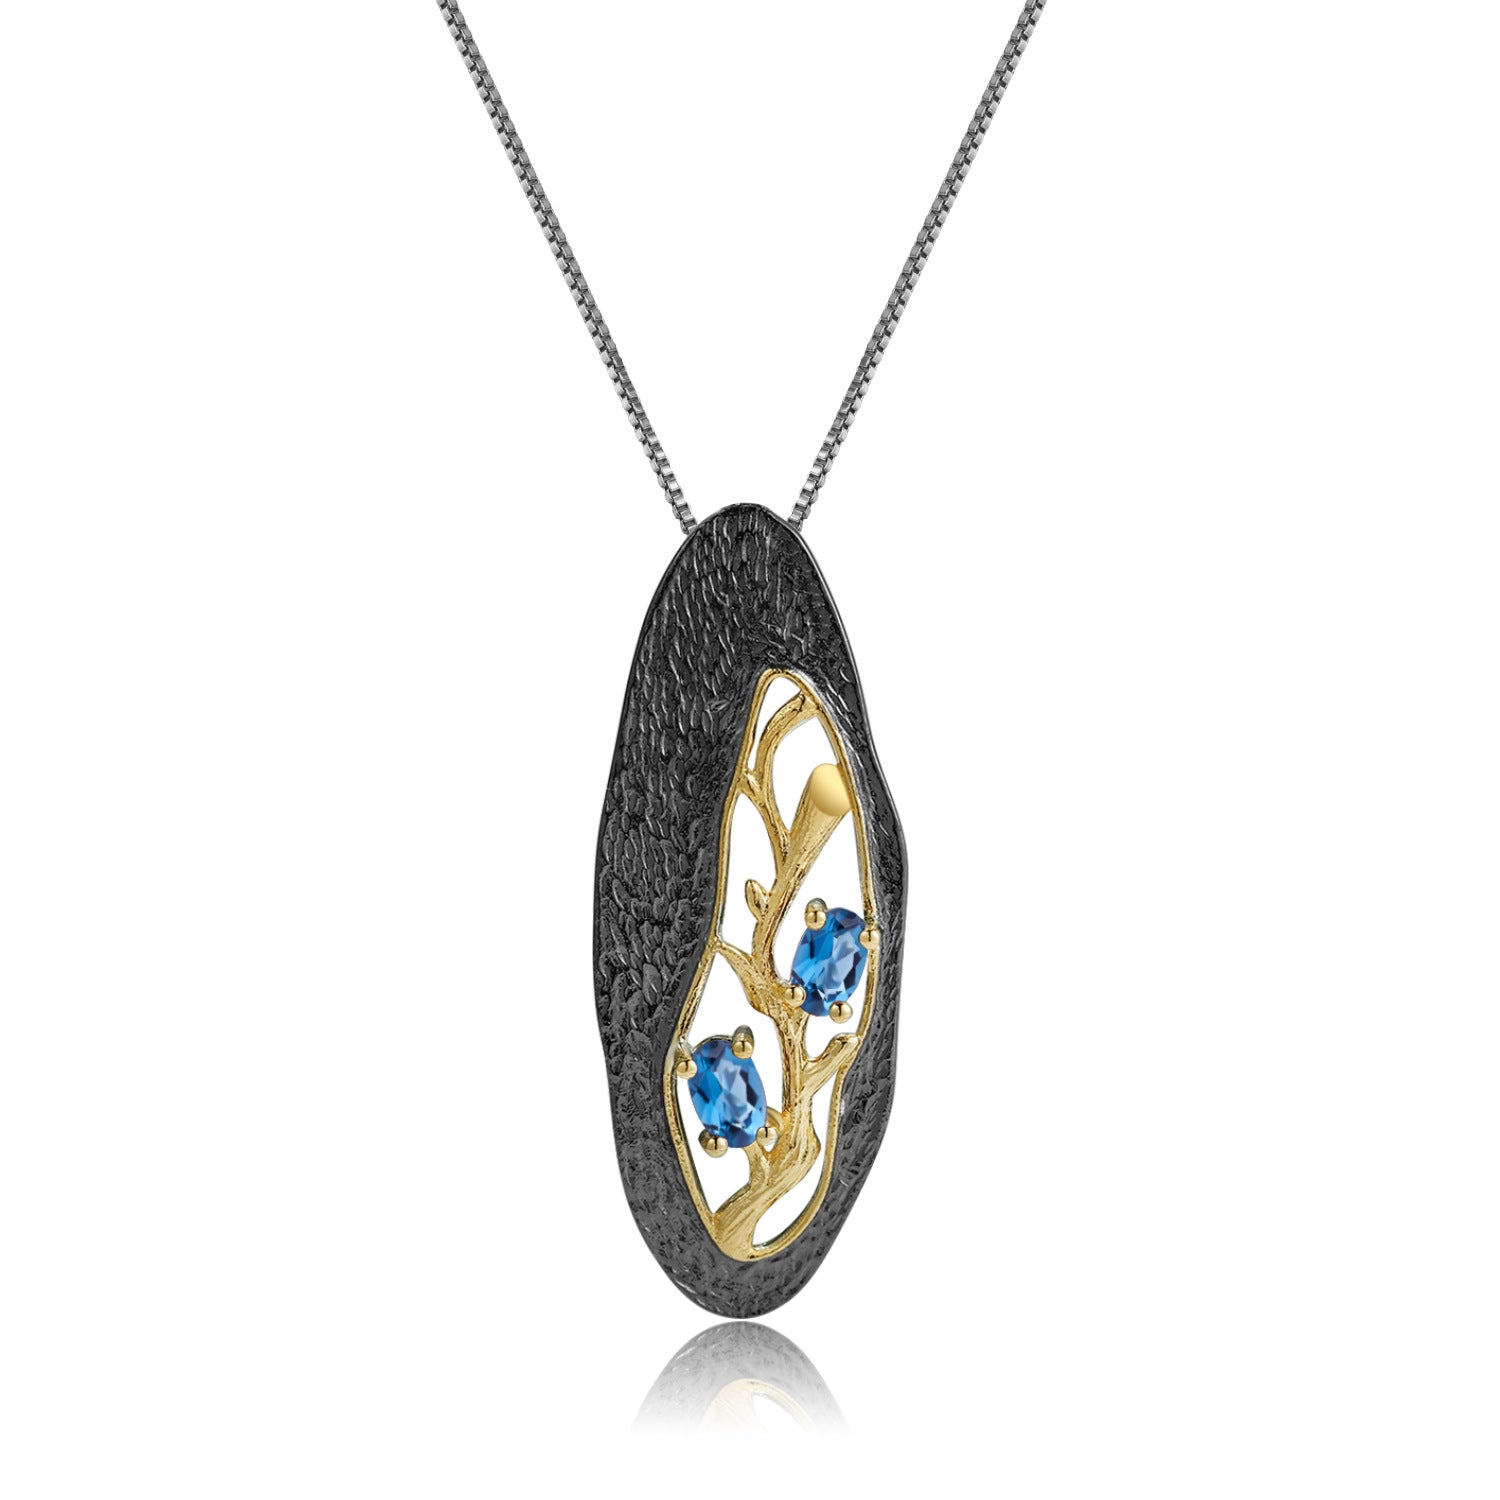 Secret Garden Sandwich Branch Design Natural Colourful Gemstone Pendant Sterling Silver Necklace for Women